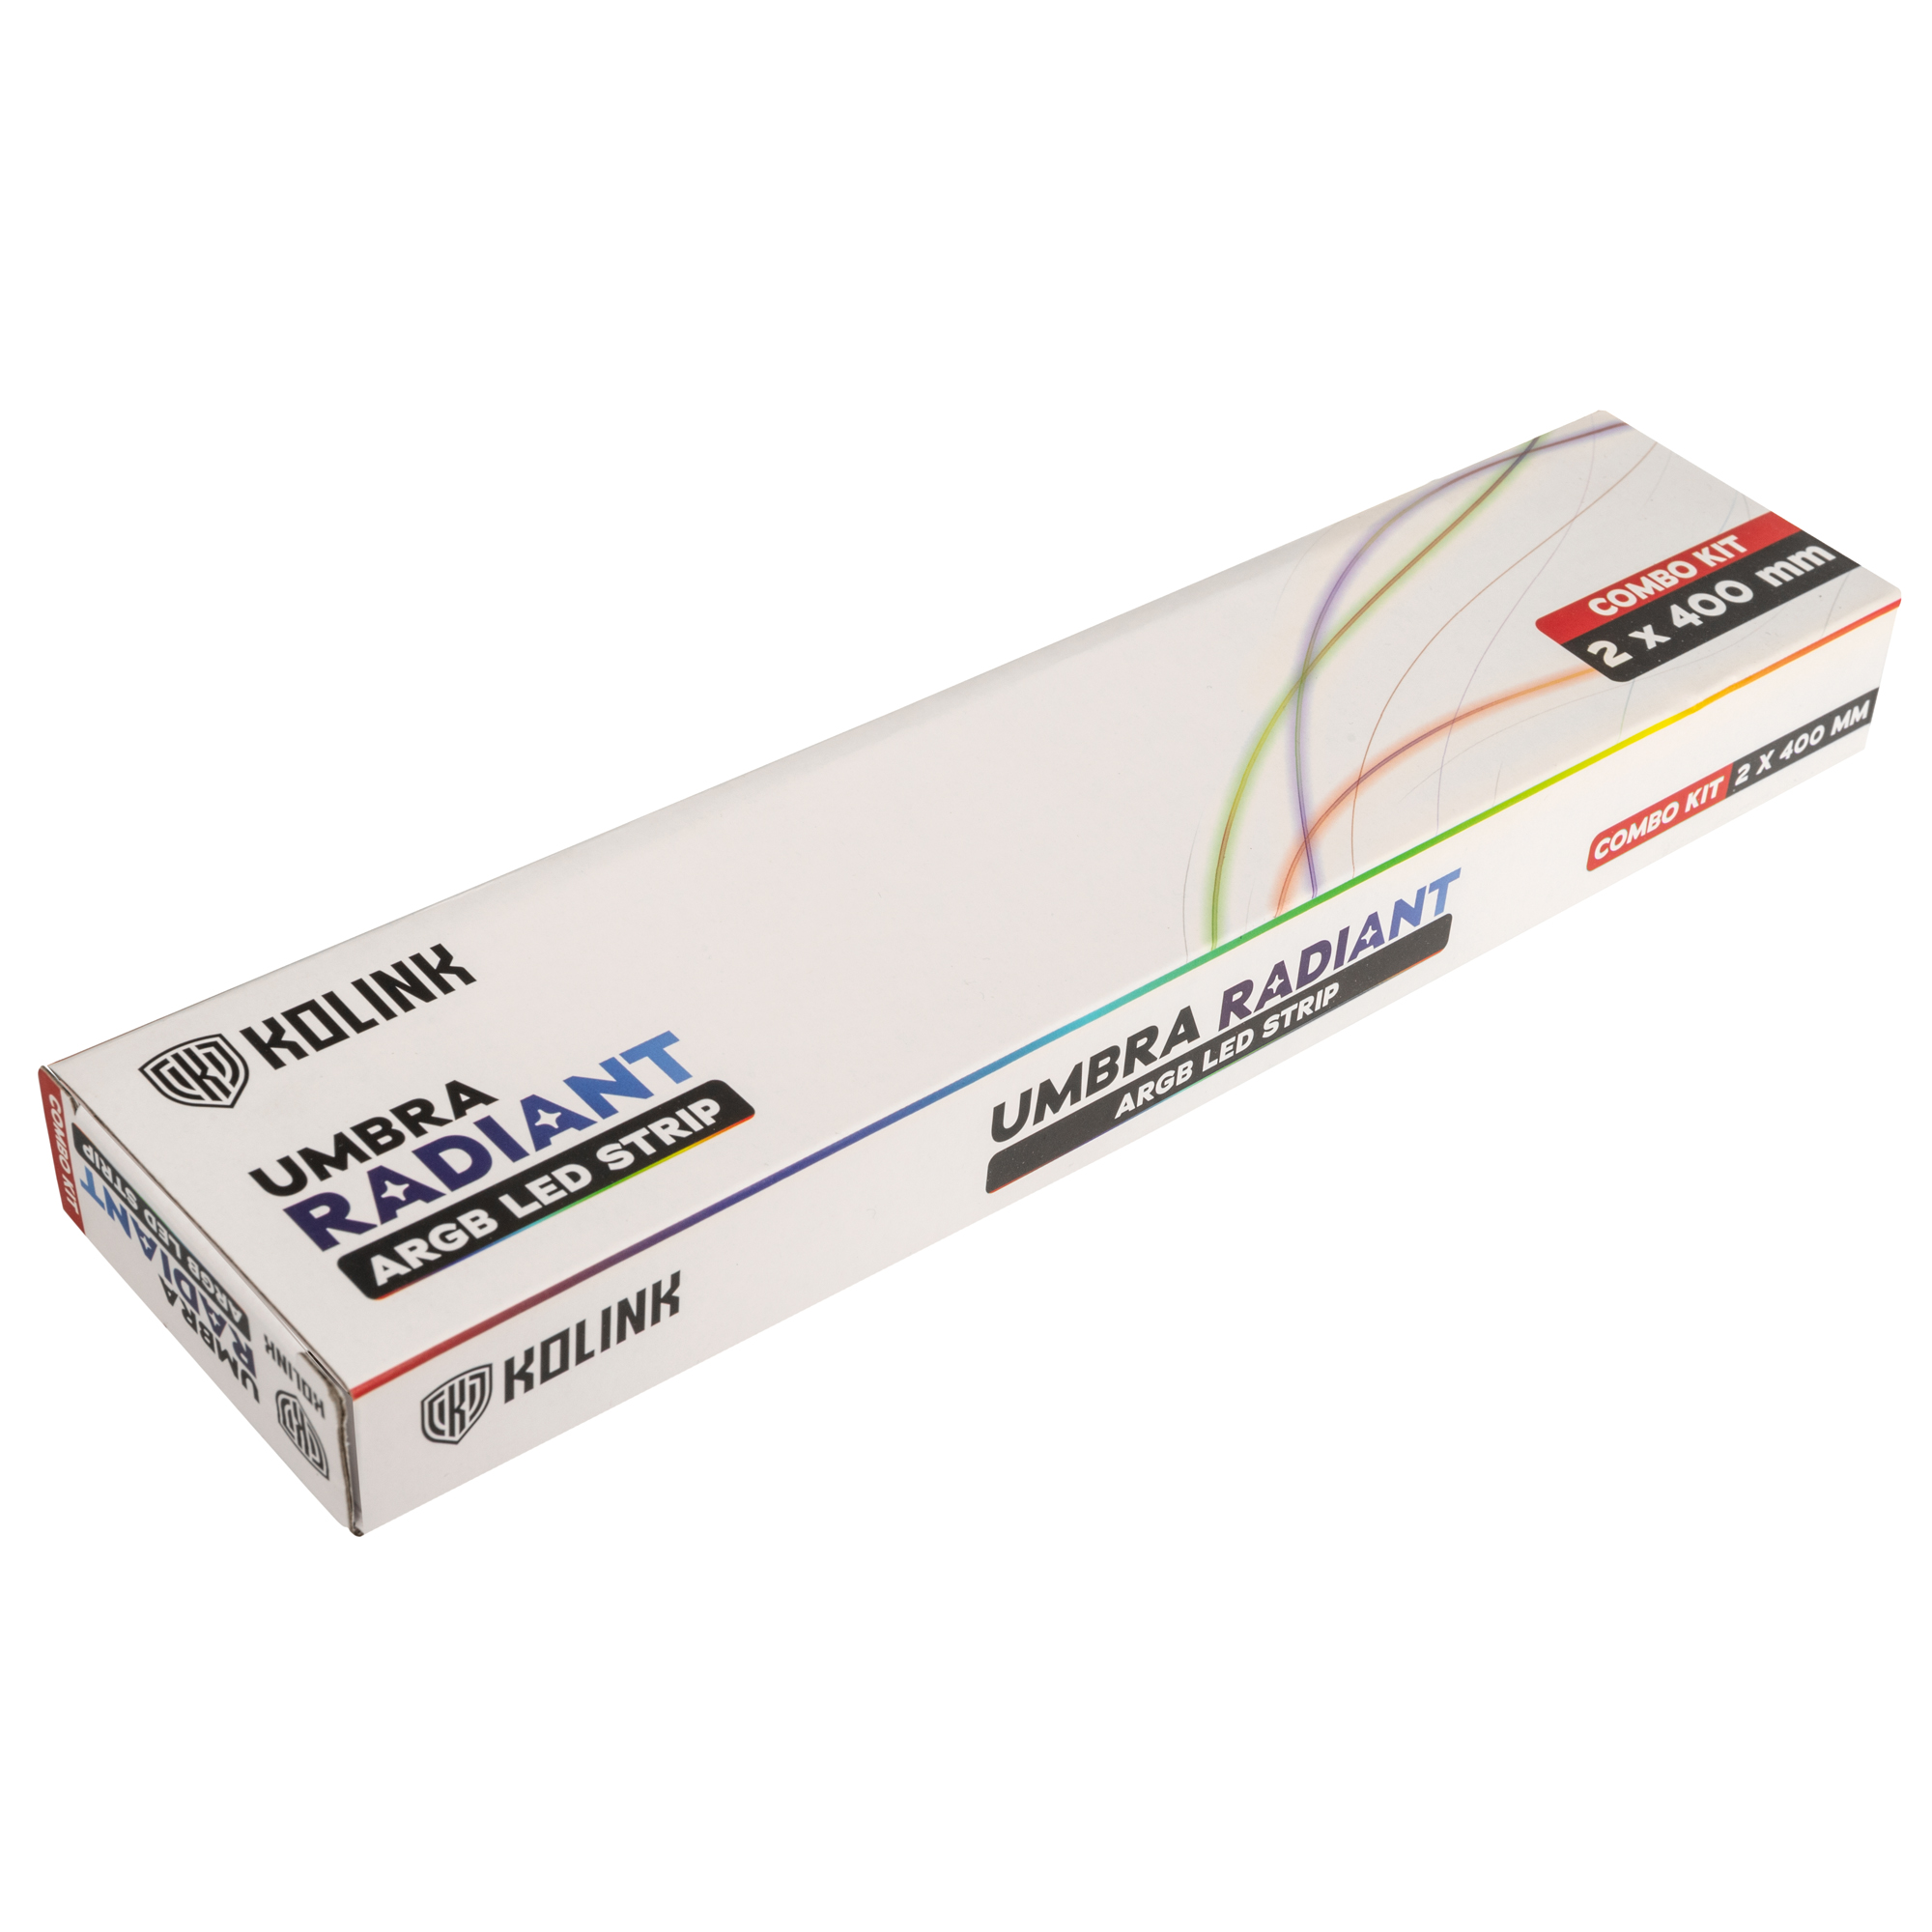 Kolink - Kolink Umbra Radiant ARGB LED Strip Combo Kit - 2 x 400mm